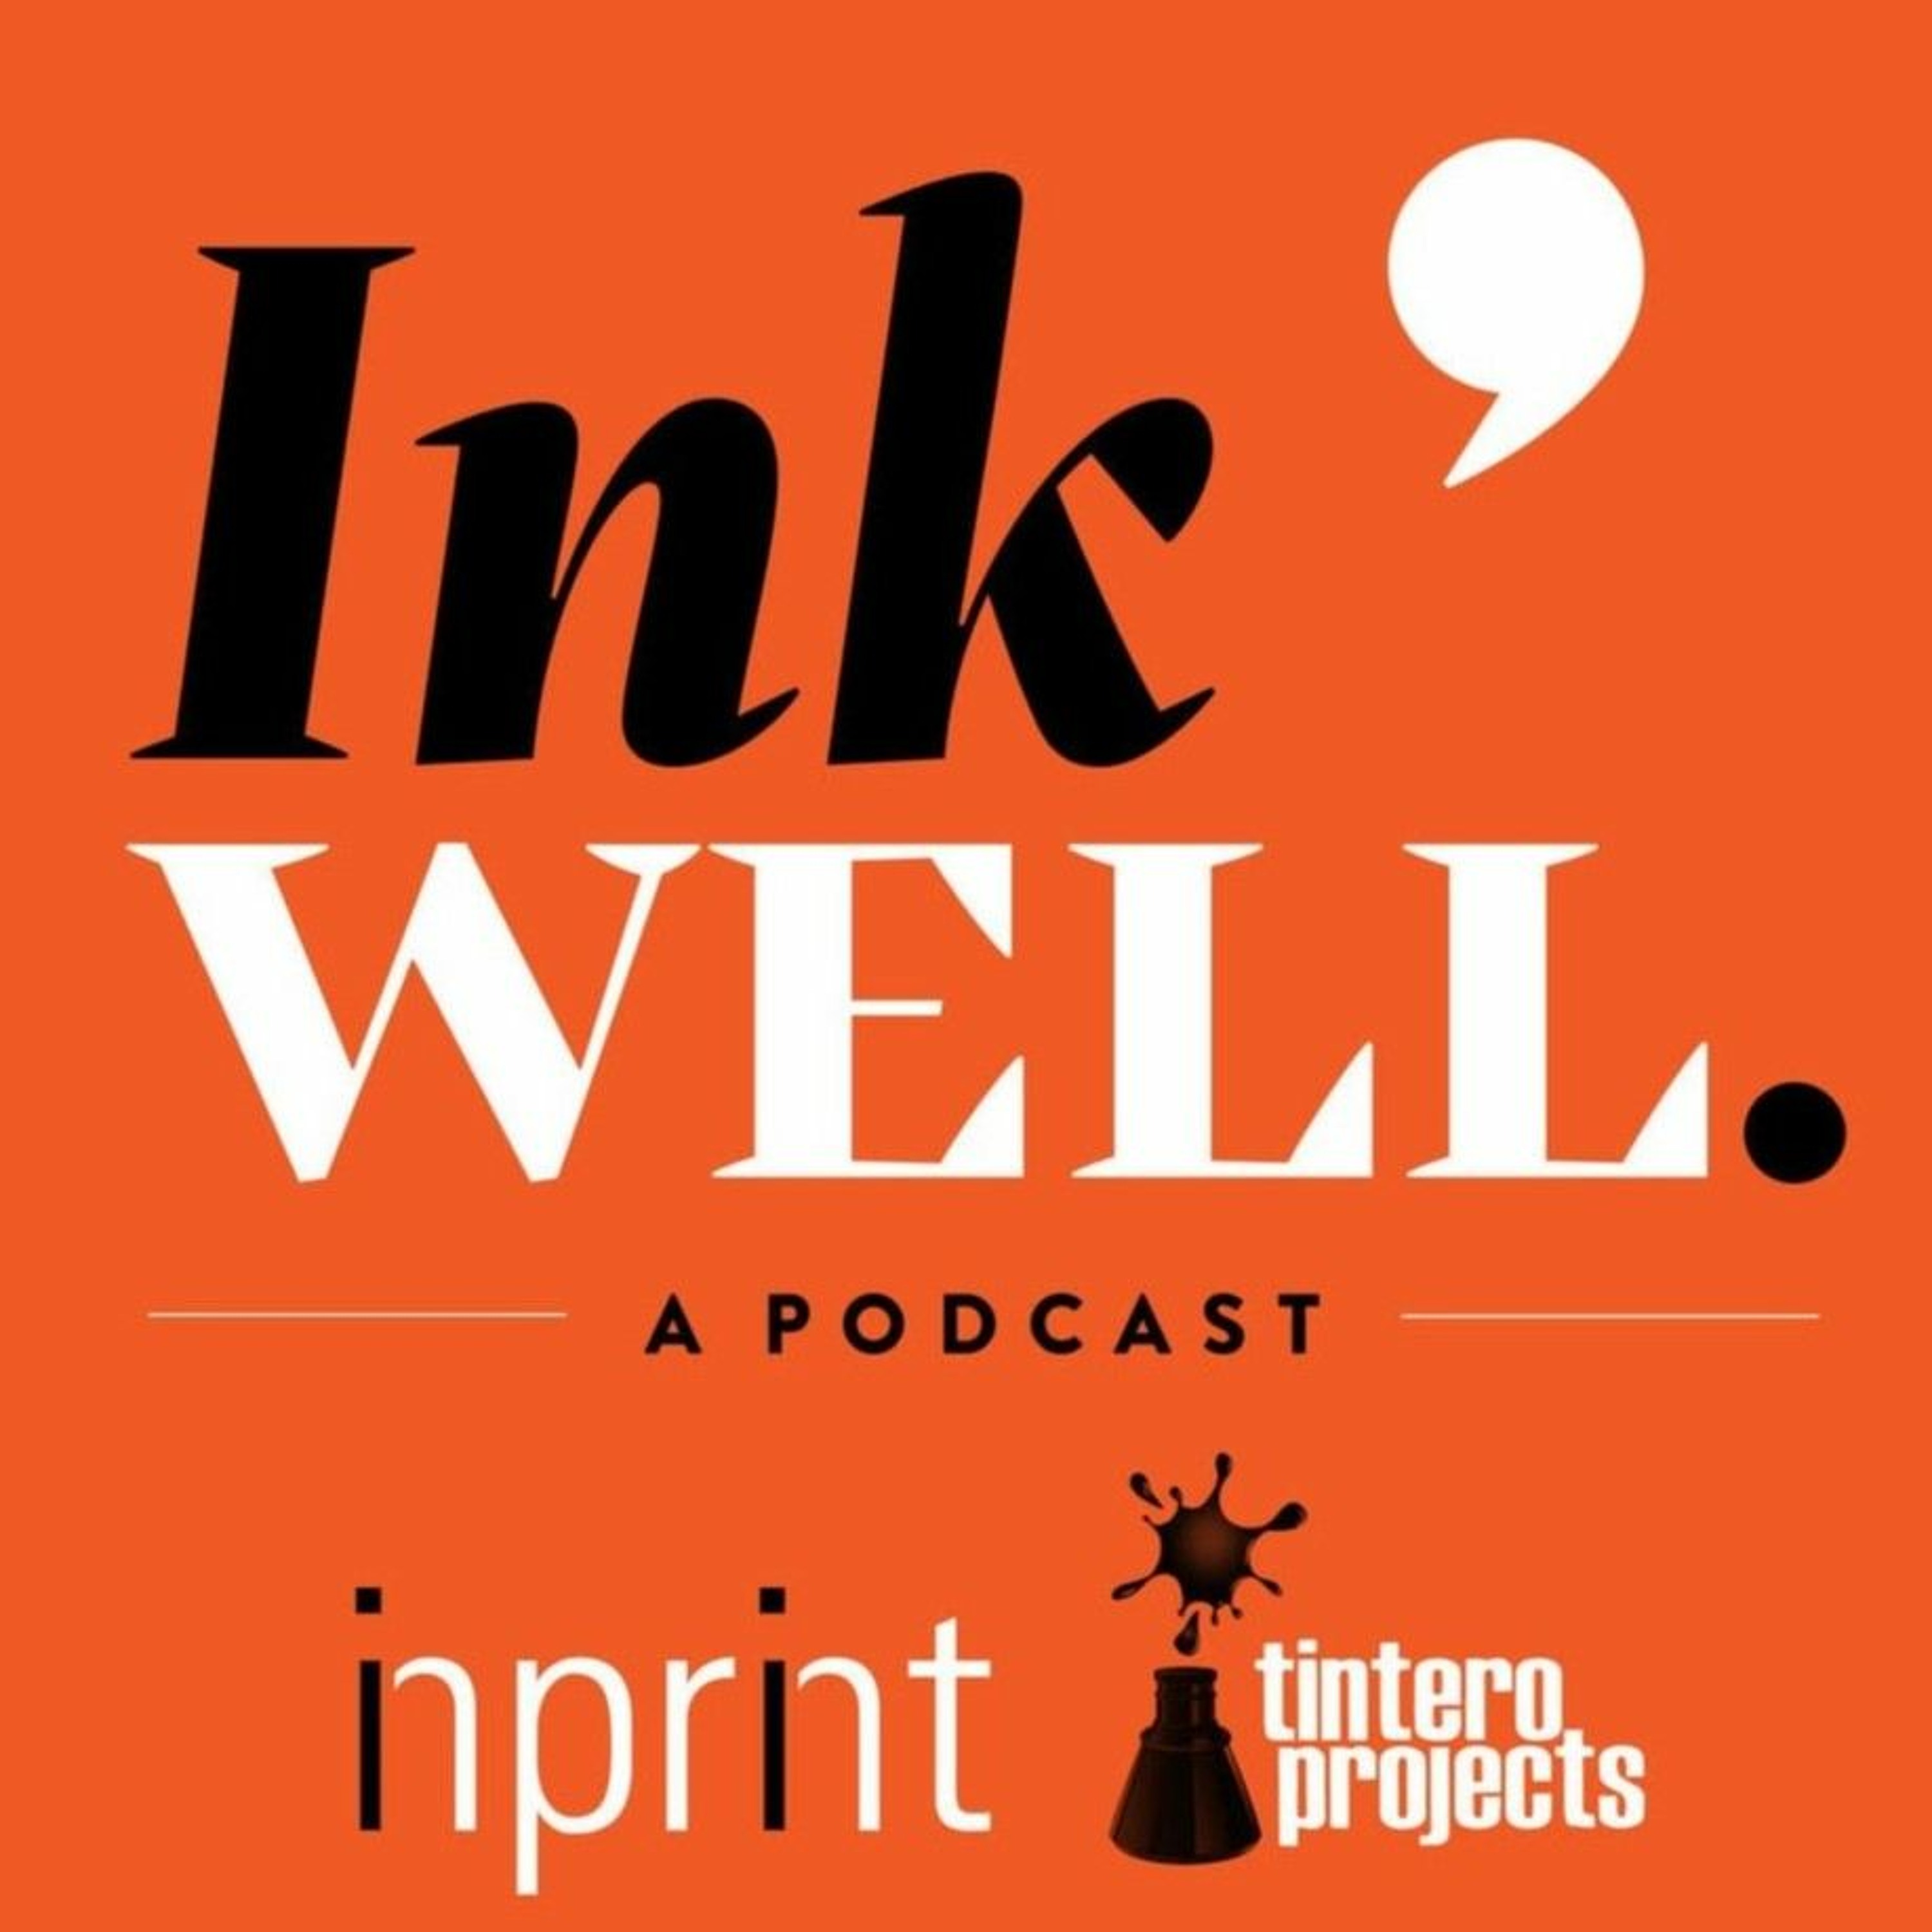 Ink Well S1 E2 featuring writer Daniel Peña